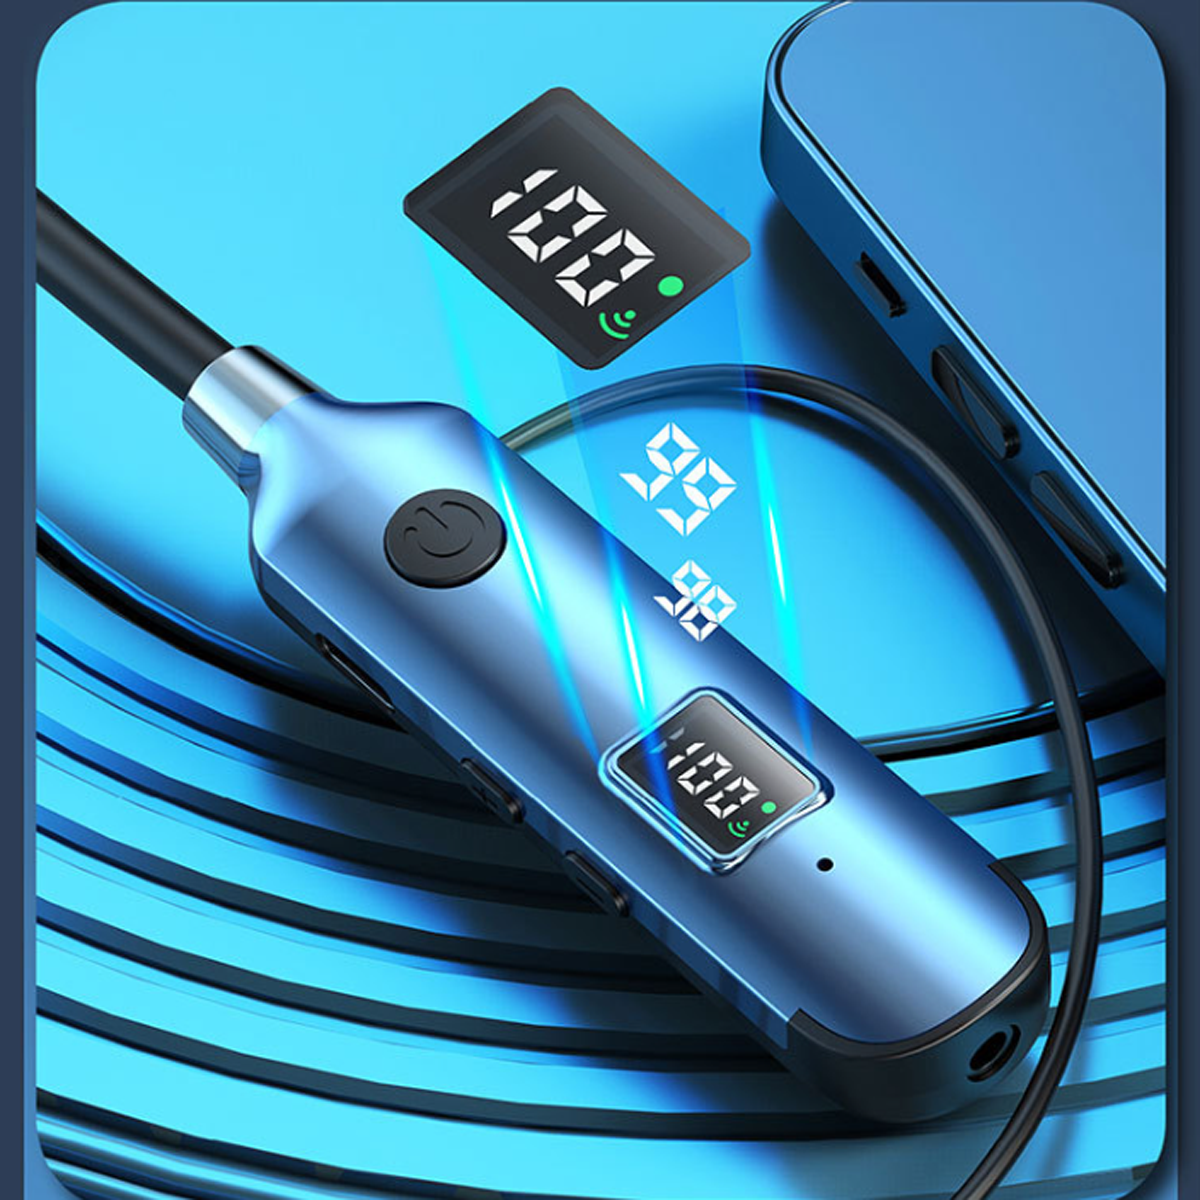 Headset - Soundkarte, Bluetooth drahtlose Headset Blau mit drahtlose ENBAOXIN Drahtloses Fernbedienung, In-ear Kopfhörer